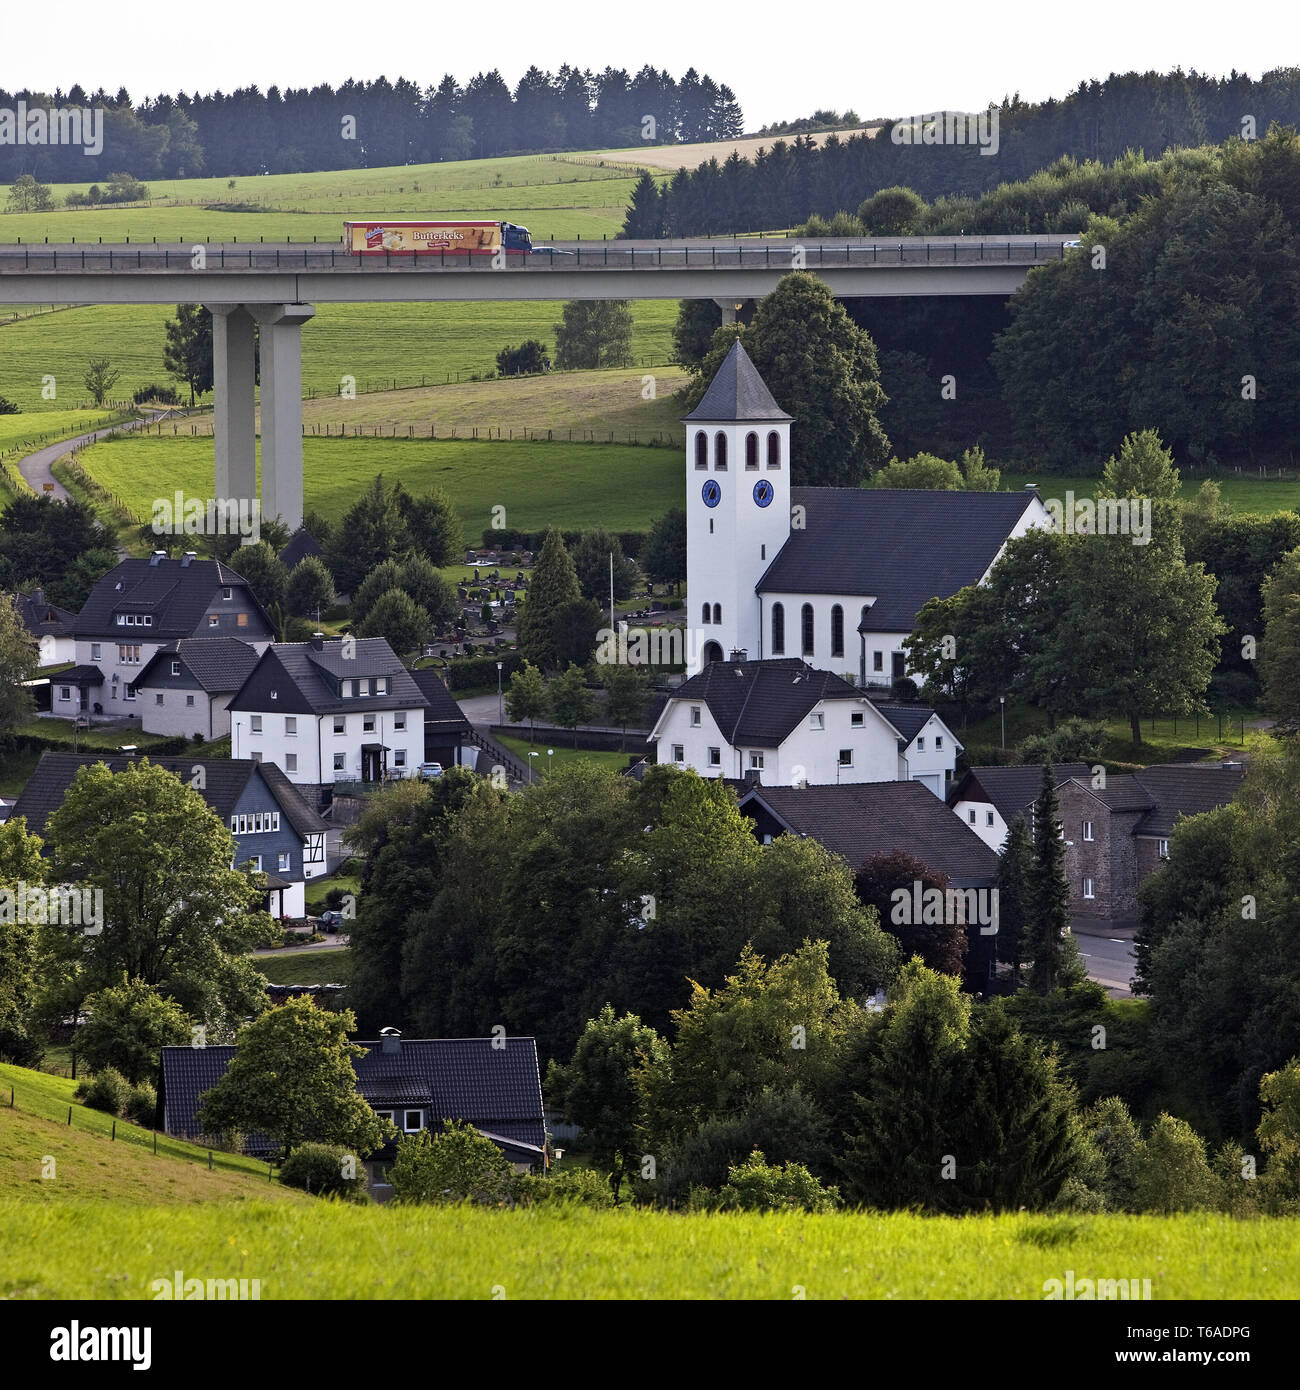 Bleche village and A45 motorway brigde, Drolshagen, Sauerland, Noth Rhine-Westphalia, Germany Stock Photo